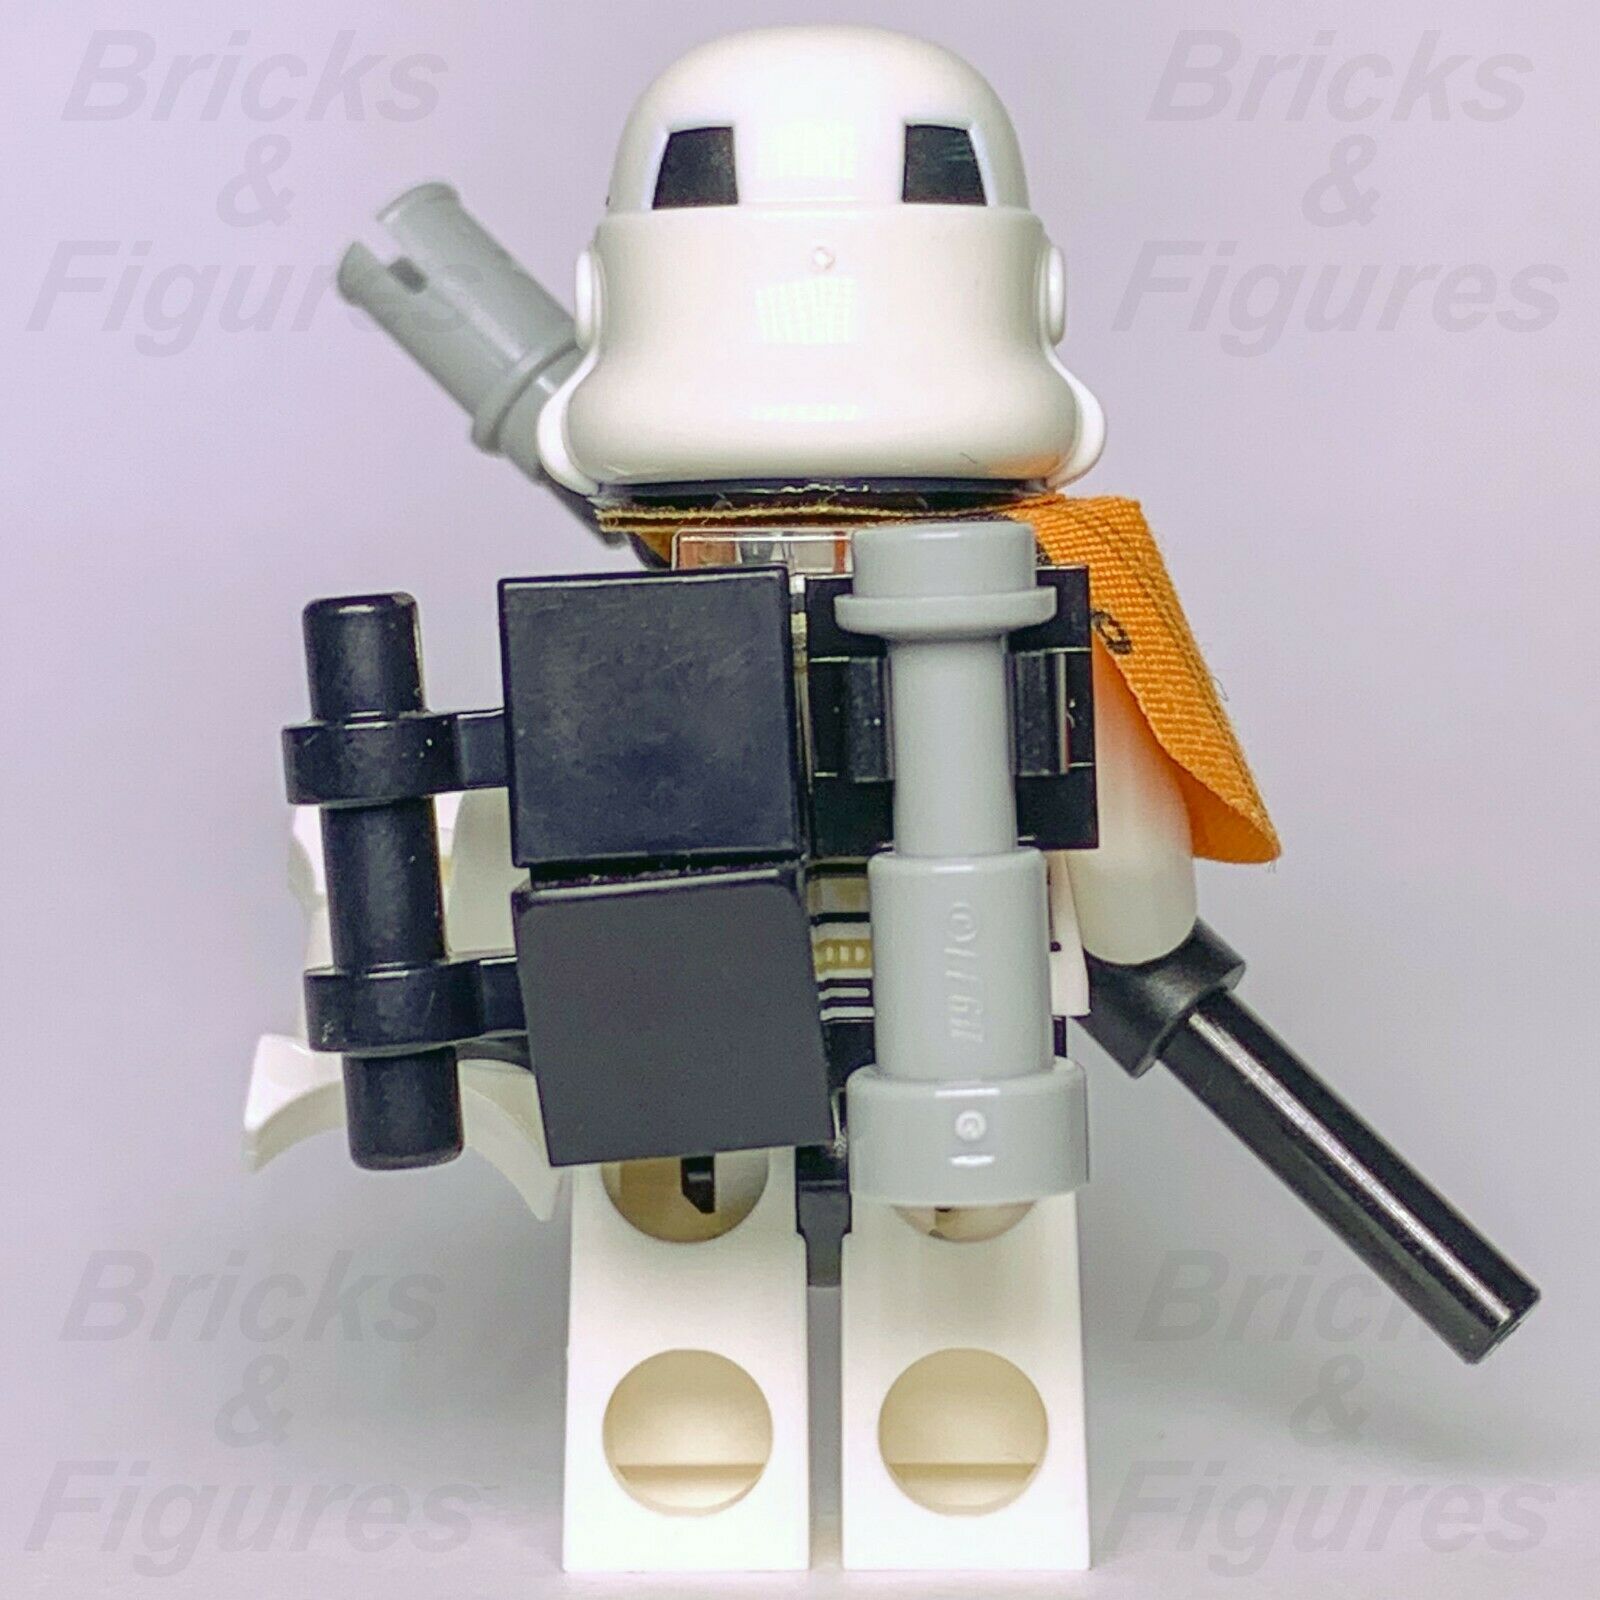 New Star Wars LEGO Imperial Sandtrooper Captain Trooper Minifigure from 75228 - Bricks & Figures